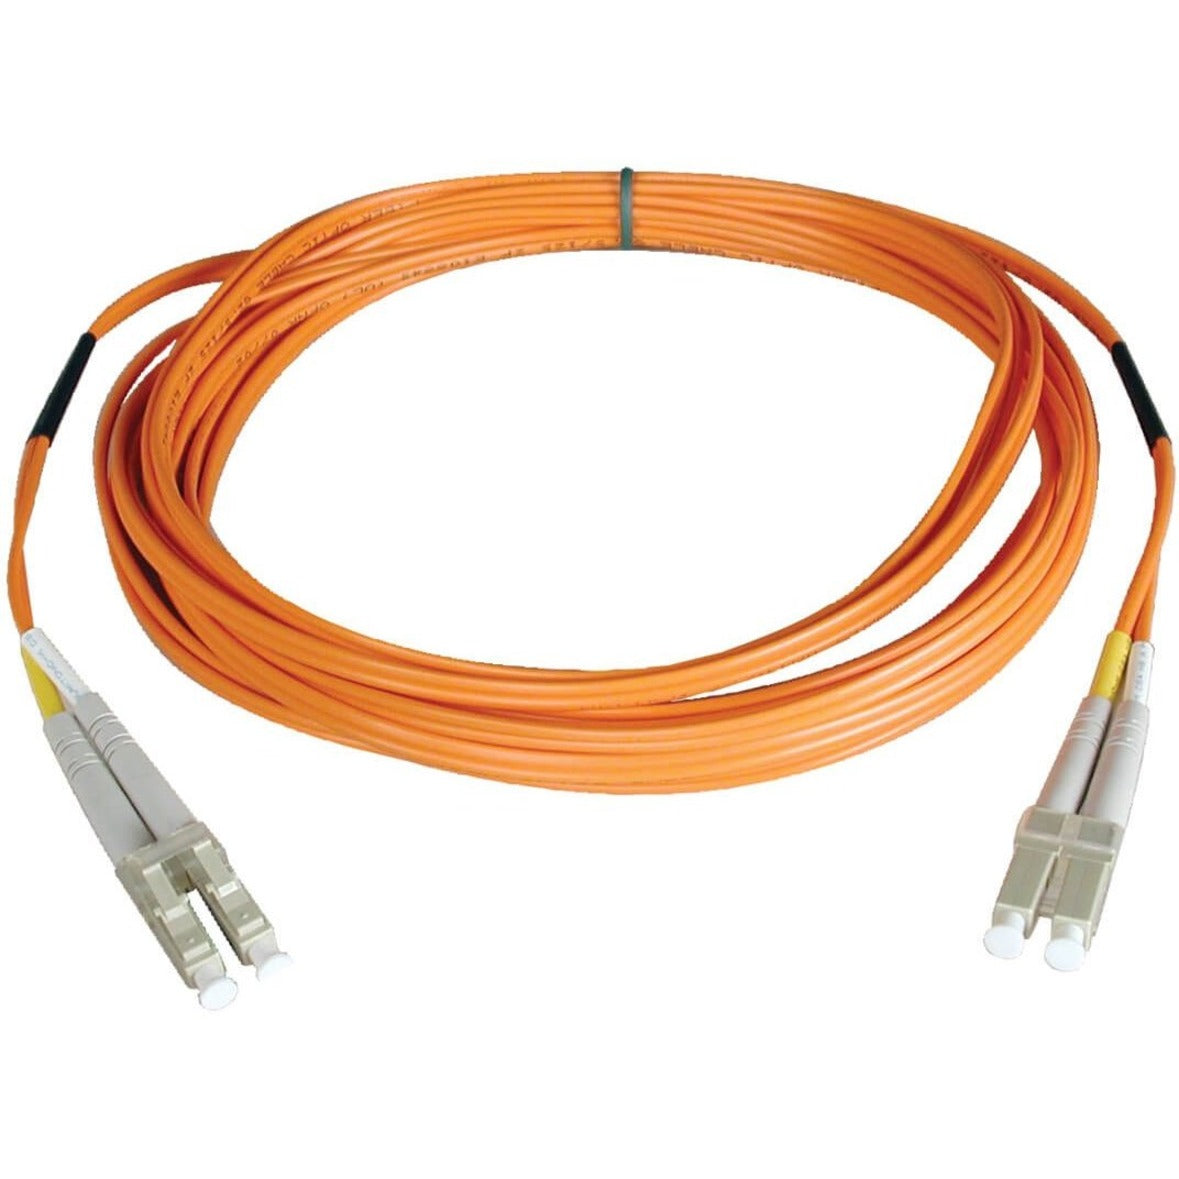 Tripp Lite N320-405 Fiber Optic Duplex Patch Cable, 405 ft, Multi-mode, Orange